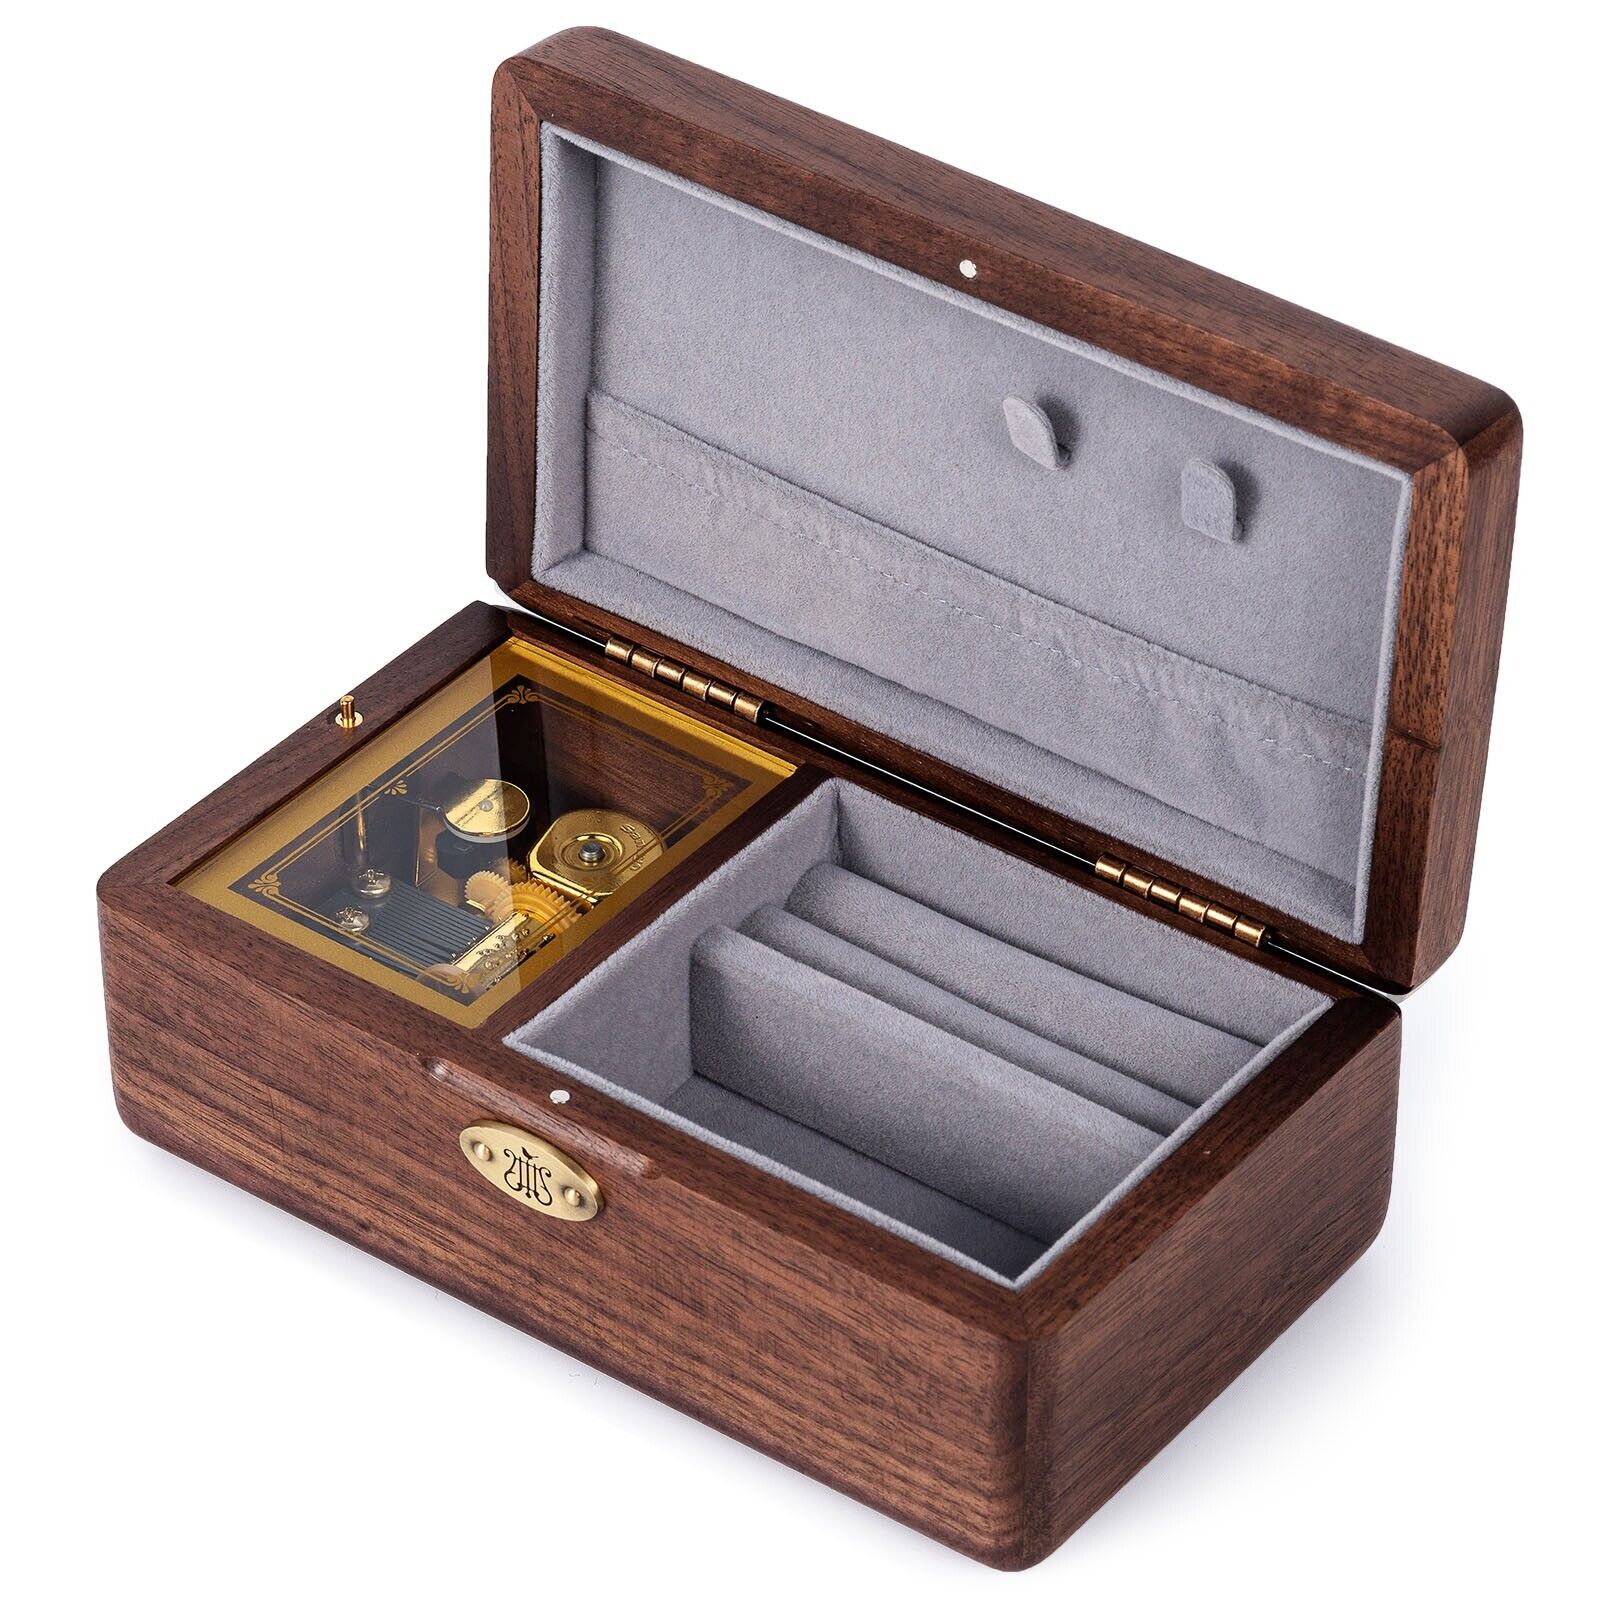 Vintage Wooden Jewelry Music box Mechanism Musical Box Gift For Girls Birthday